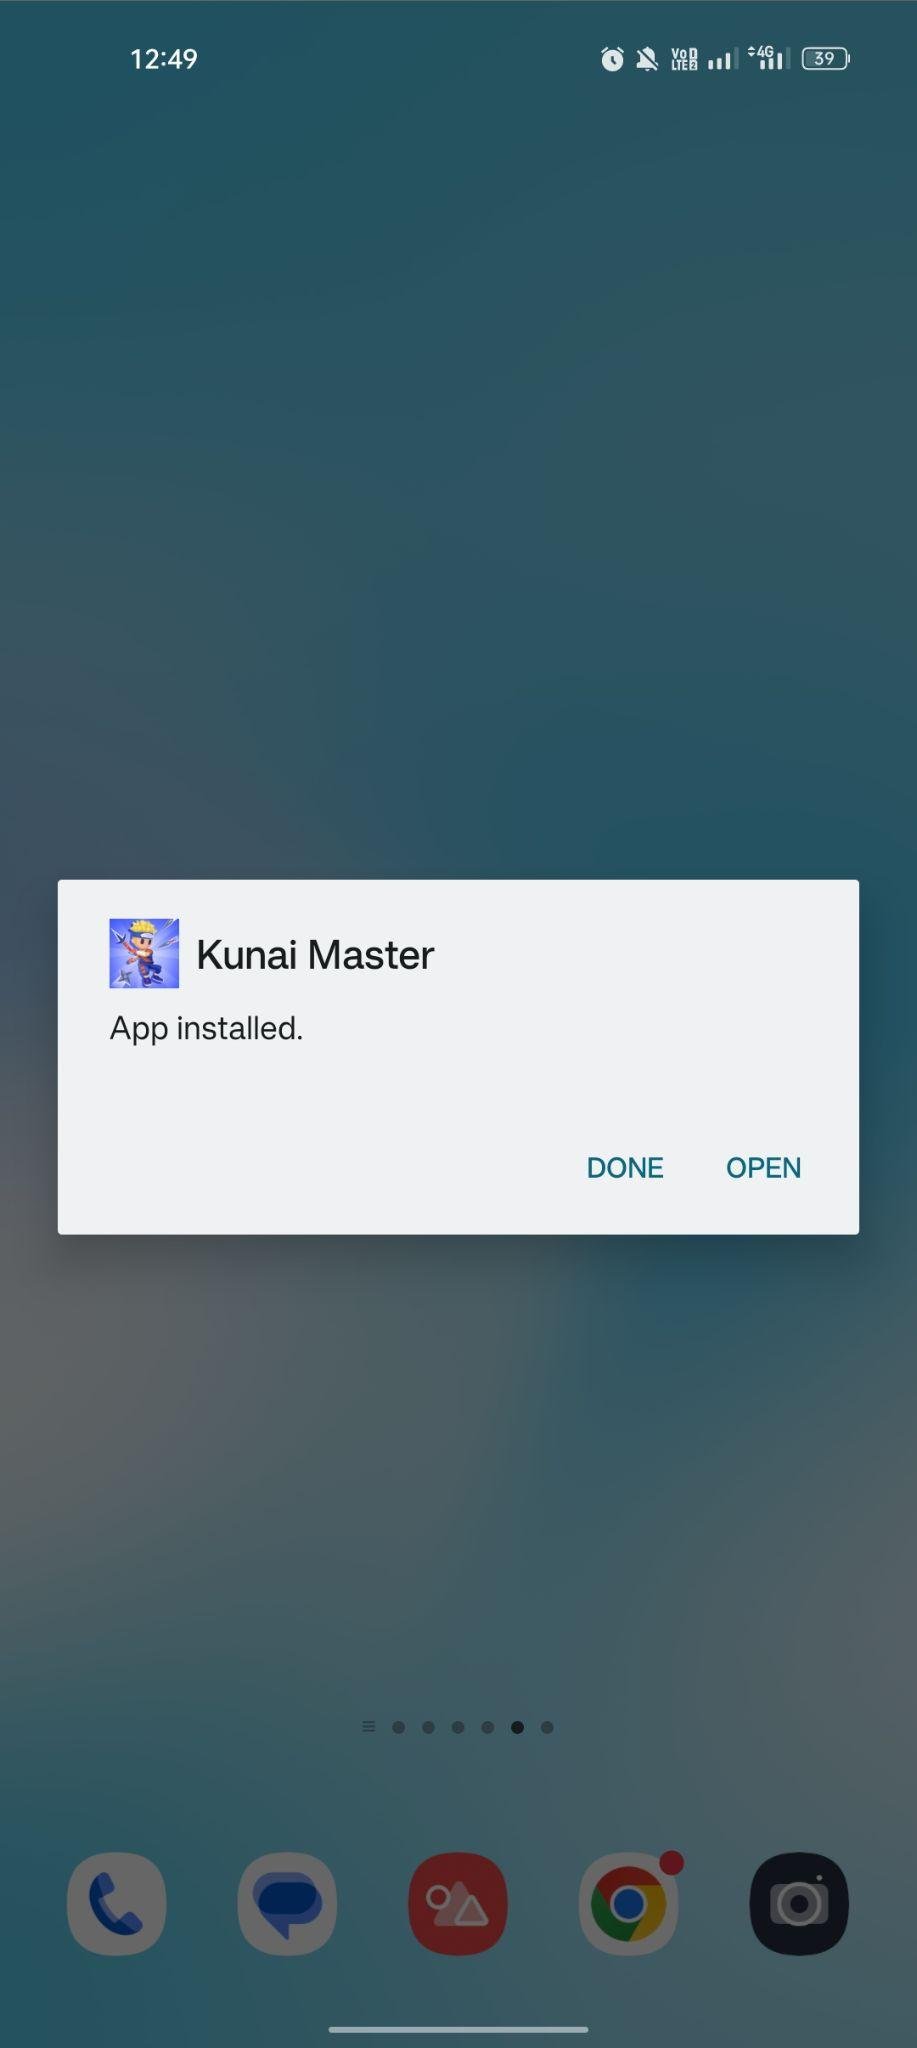 Kunai Master apk installed